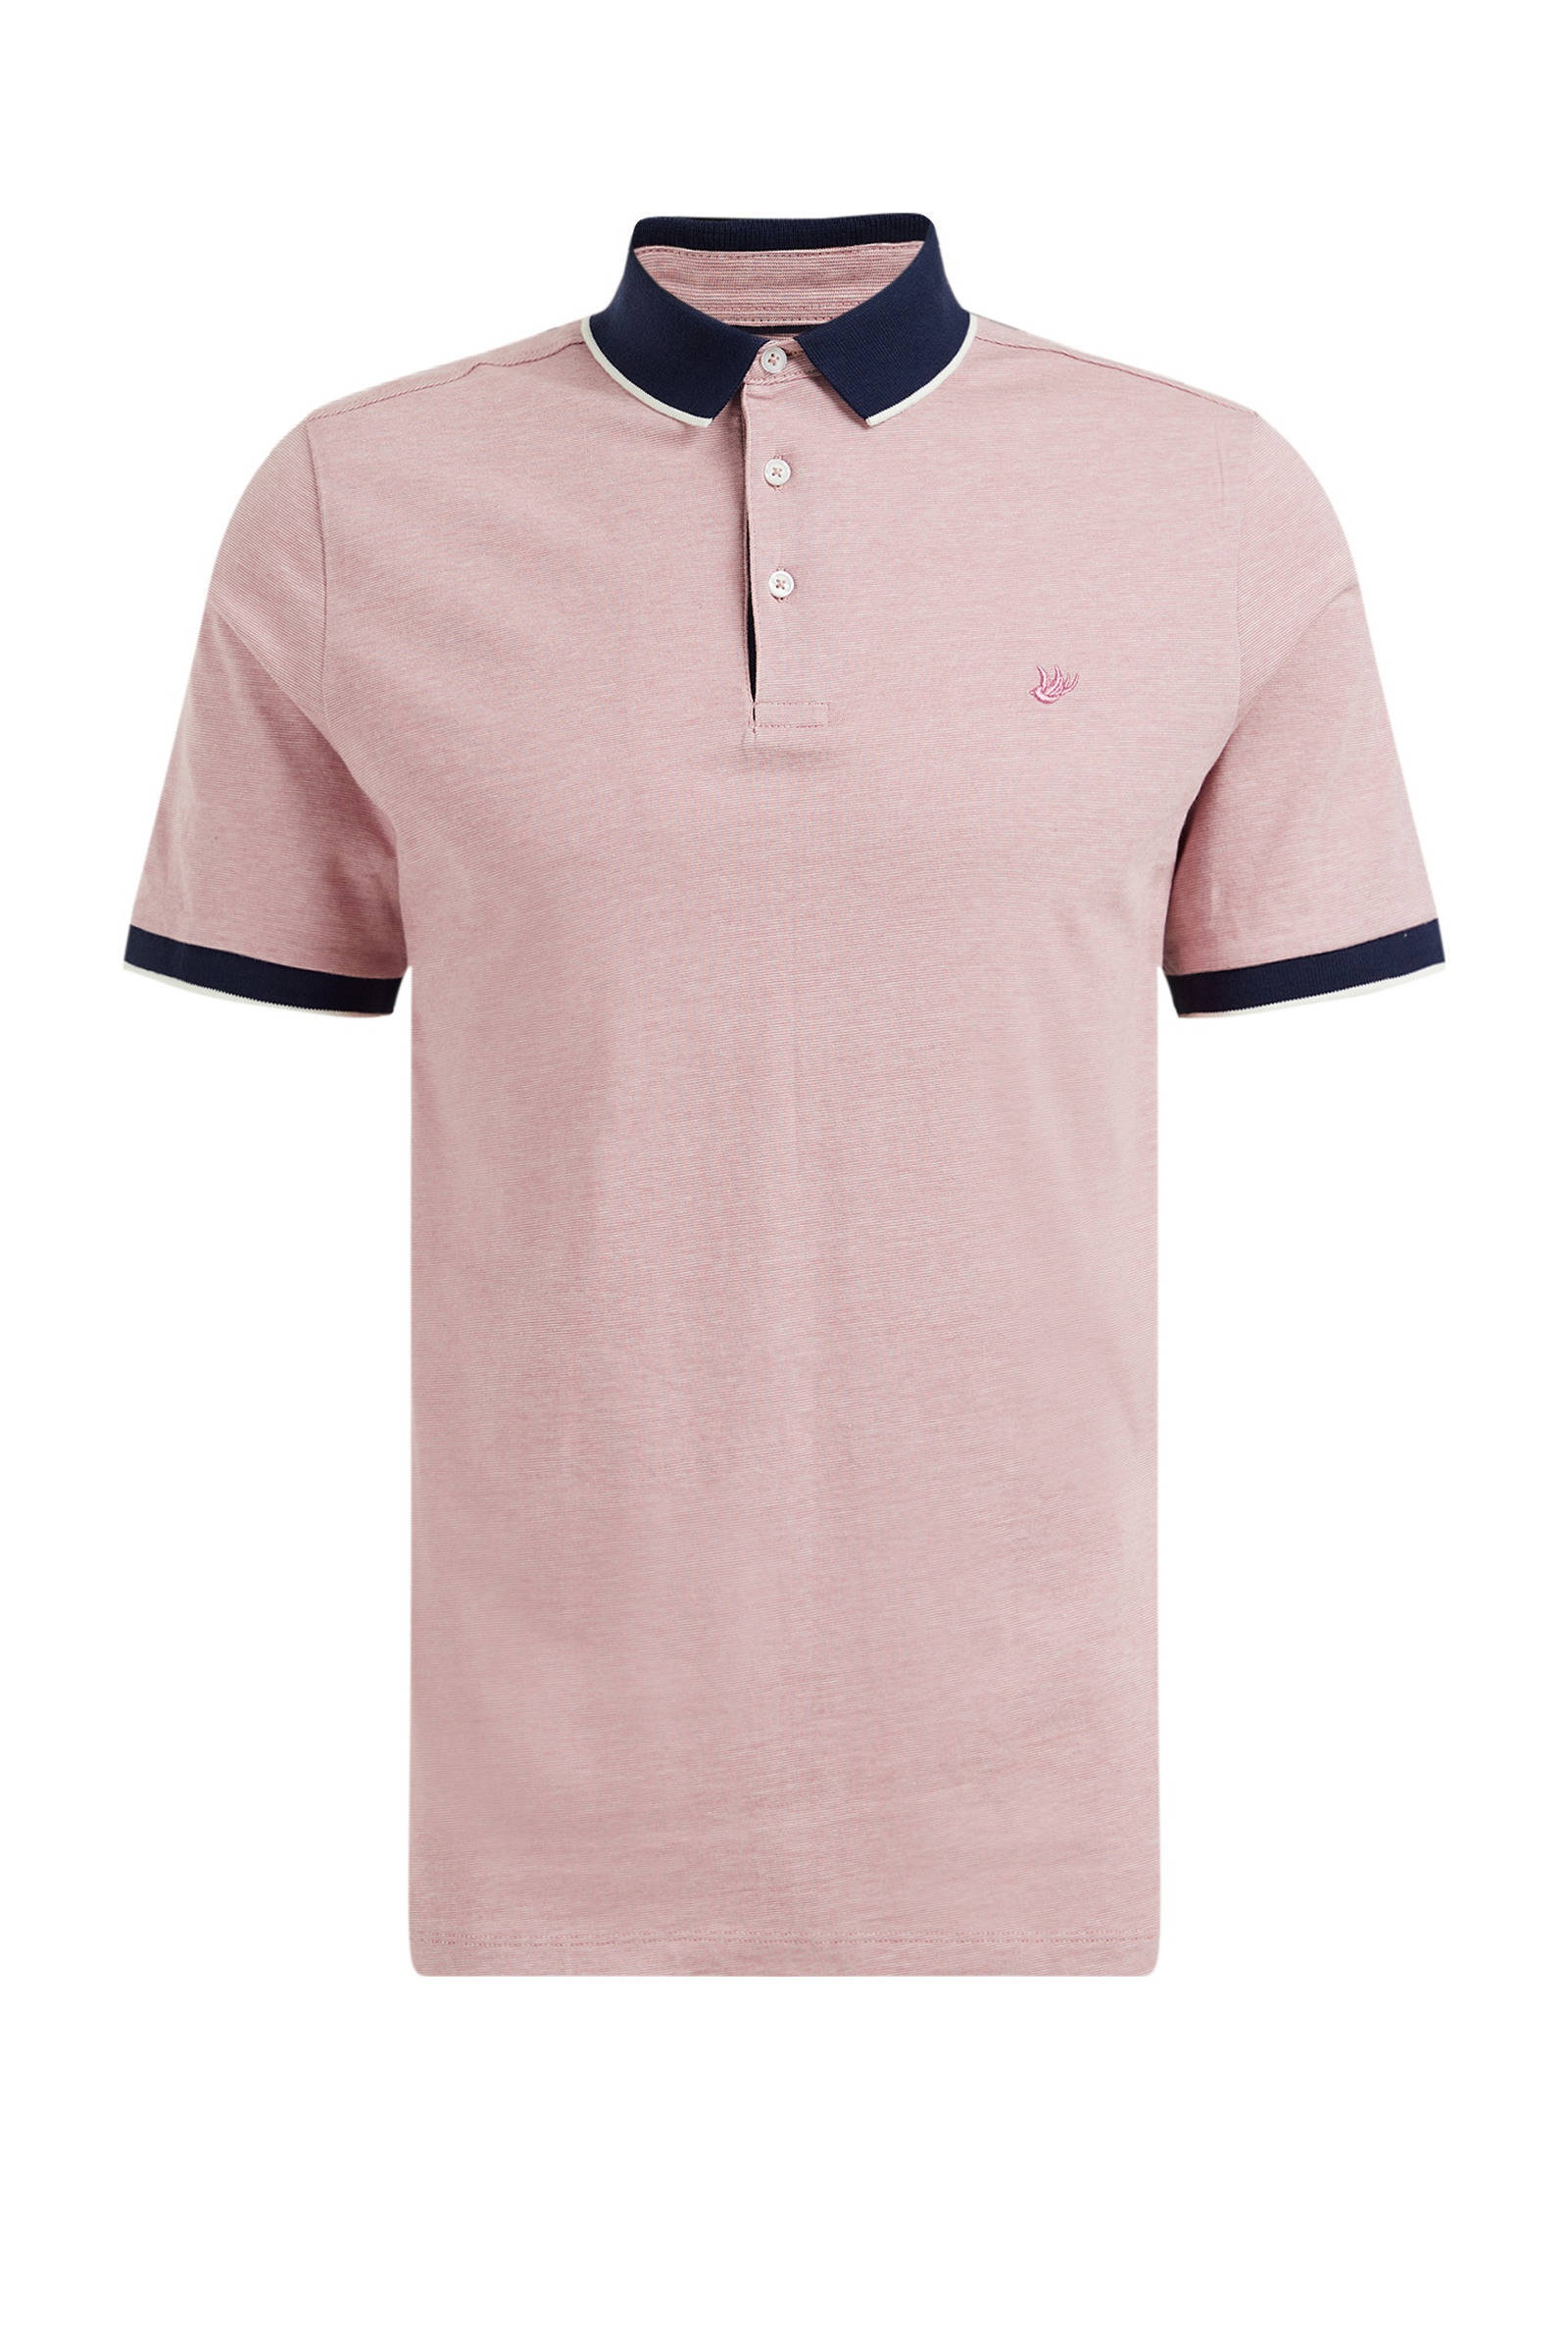 Slim fit polo roze wehkamp Heren Kleding Tops & Shirts Shirts Poloshirts 